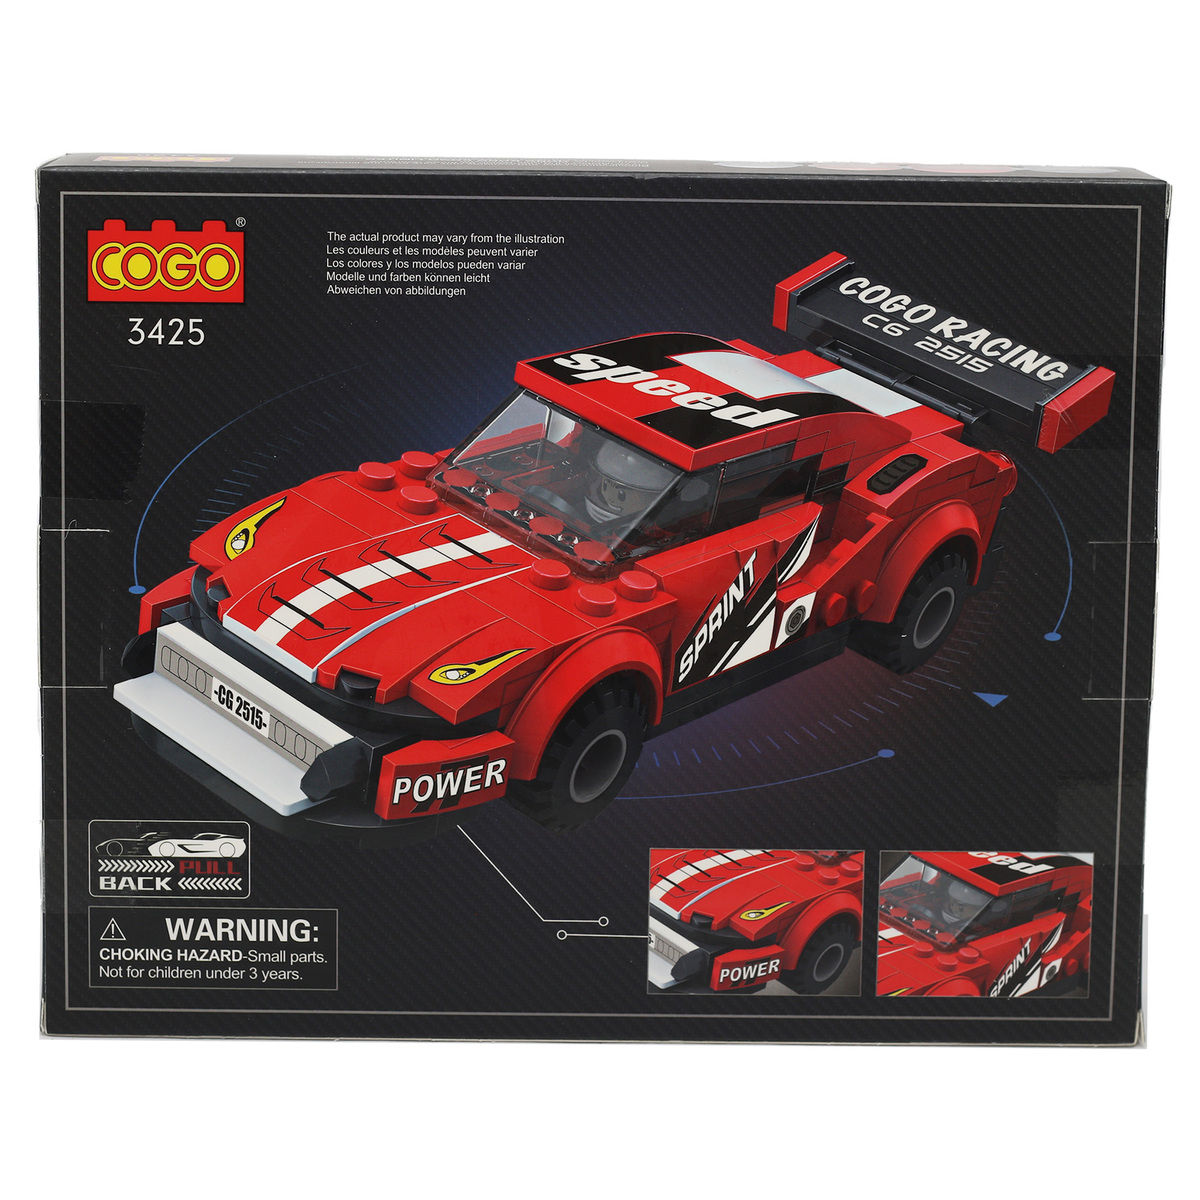 Skid Fusion Racing Car Bricks, 195 Pcs, 3425